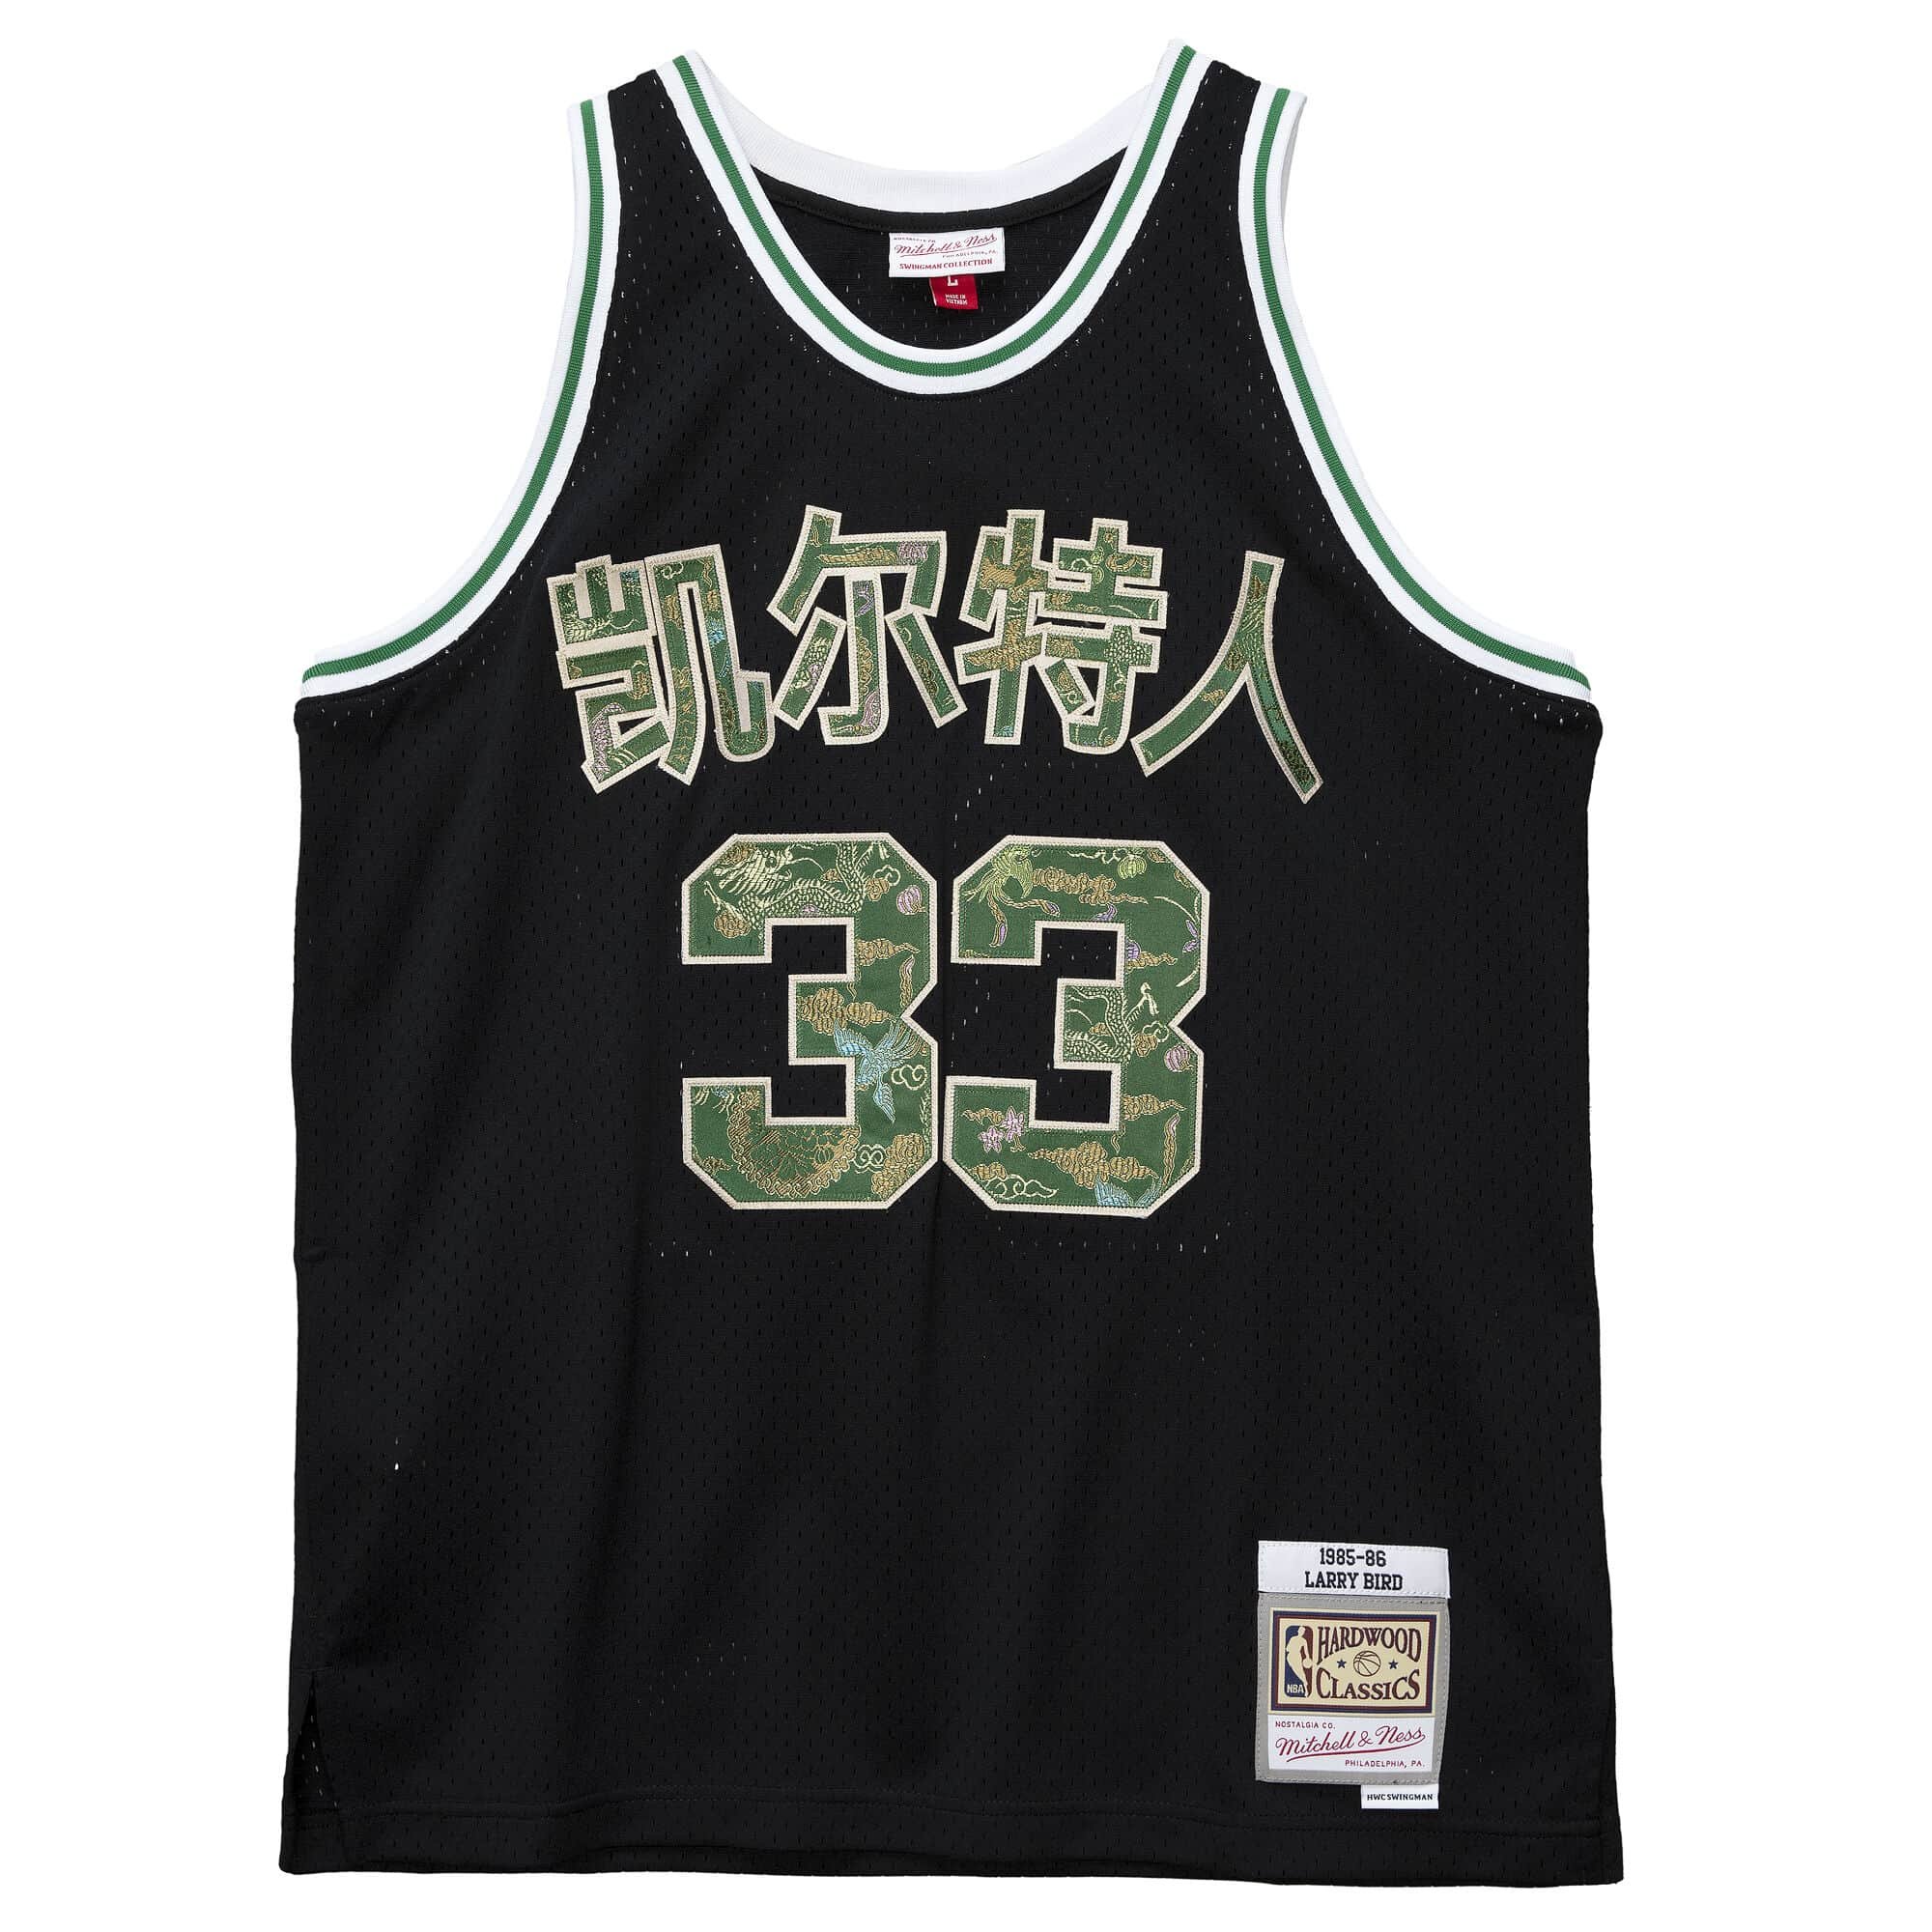 Mitchell & Ness NBA Boston Celtics Larry Bird 1985-86 Swingman